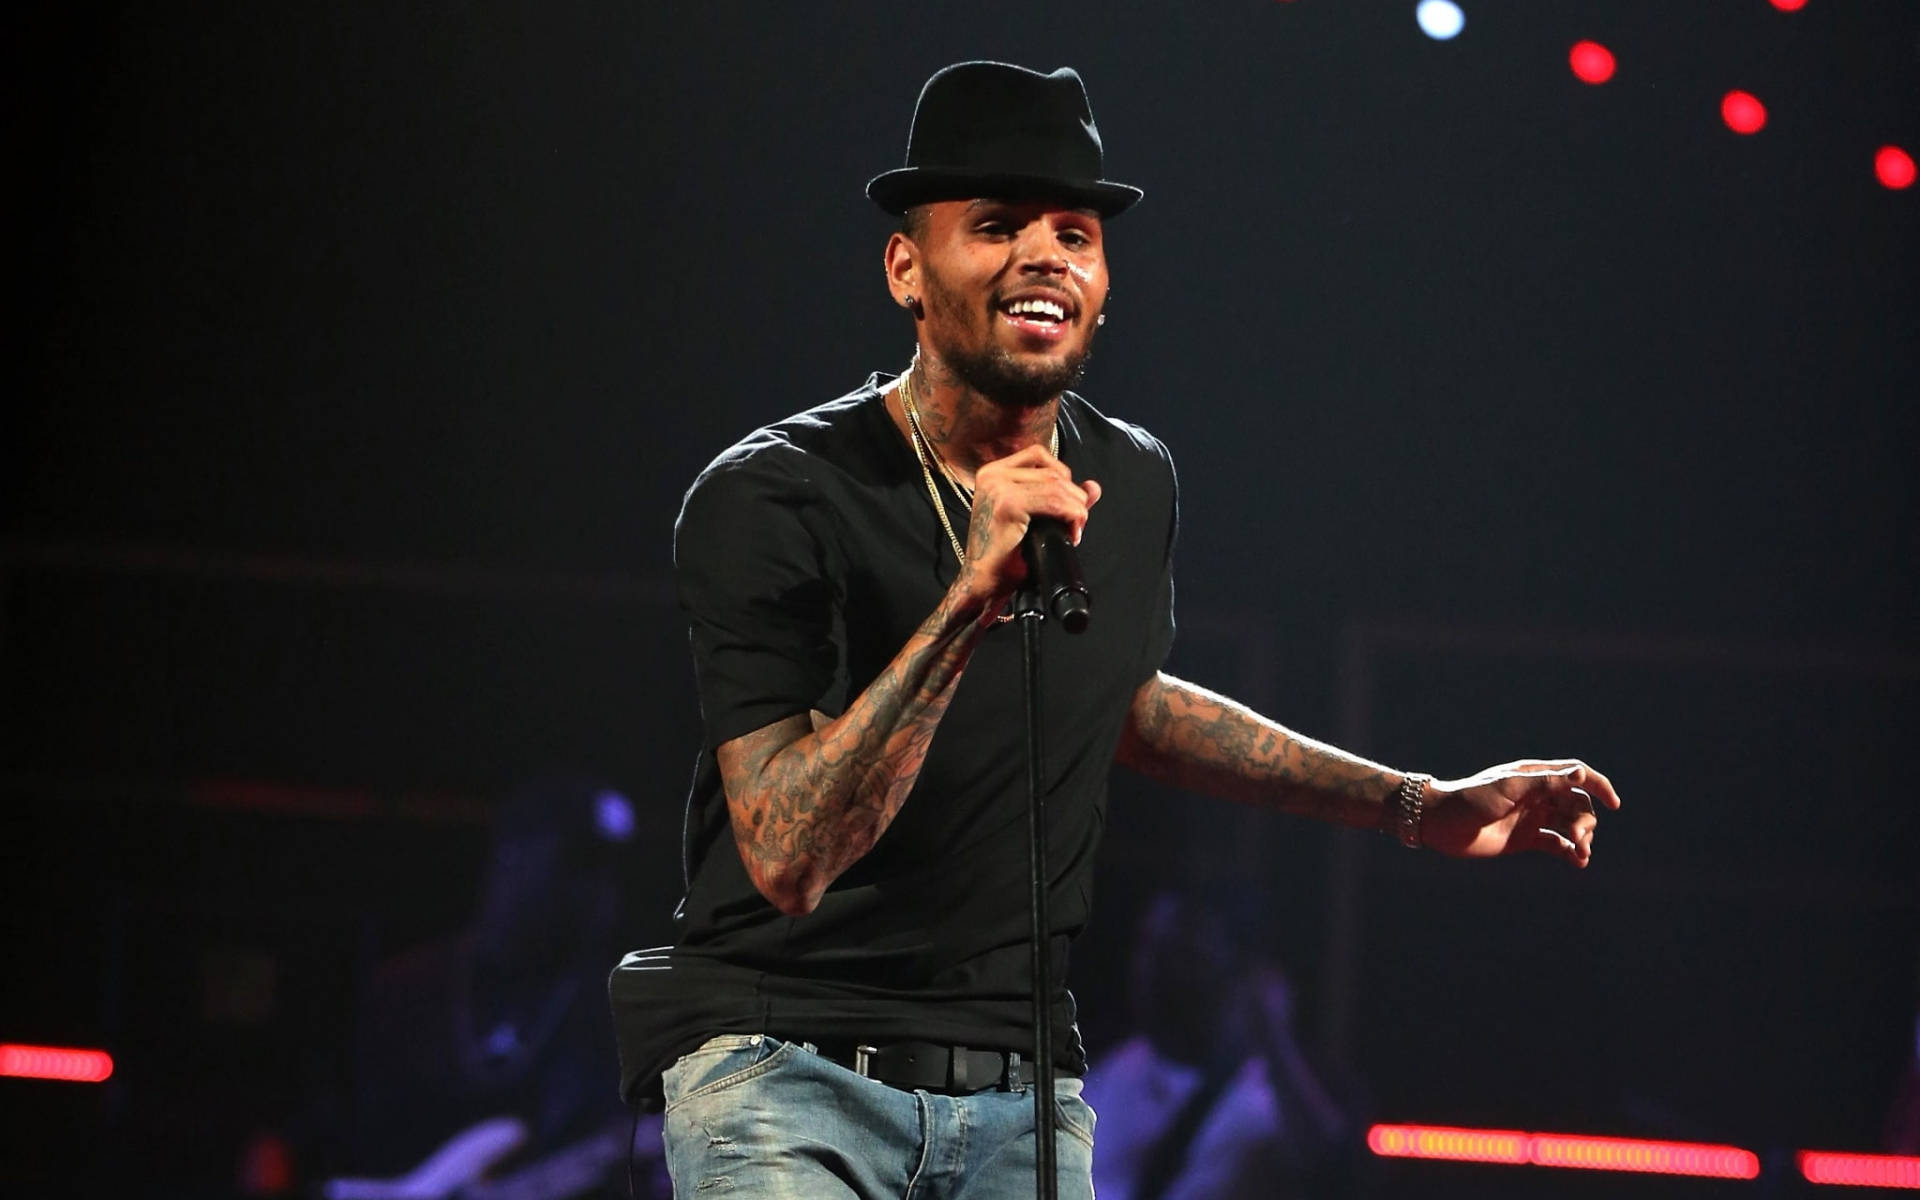 Chris Brown On Stage